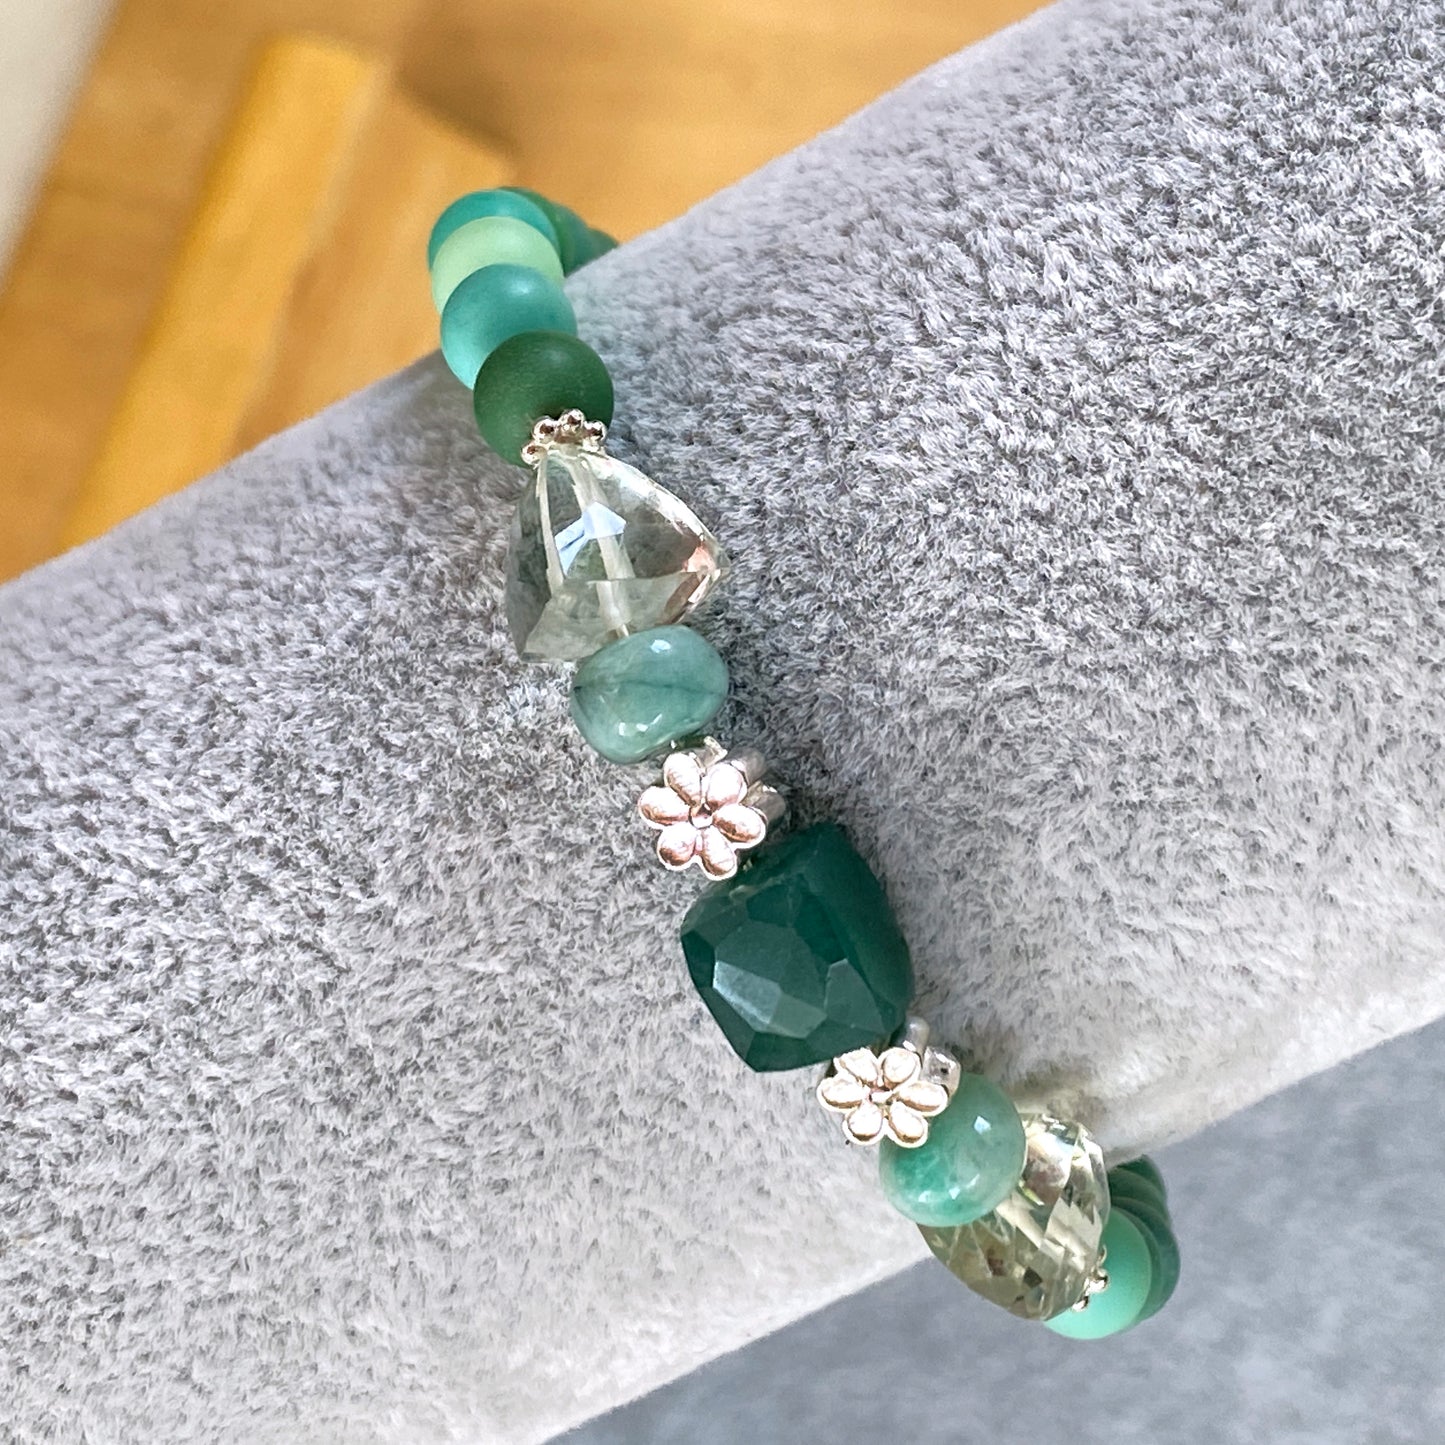 Emerald, Green Opal, Green Amethyst gemstone silver clasp bracelet